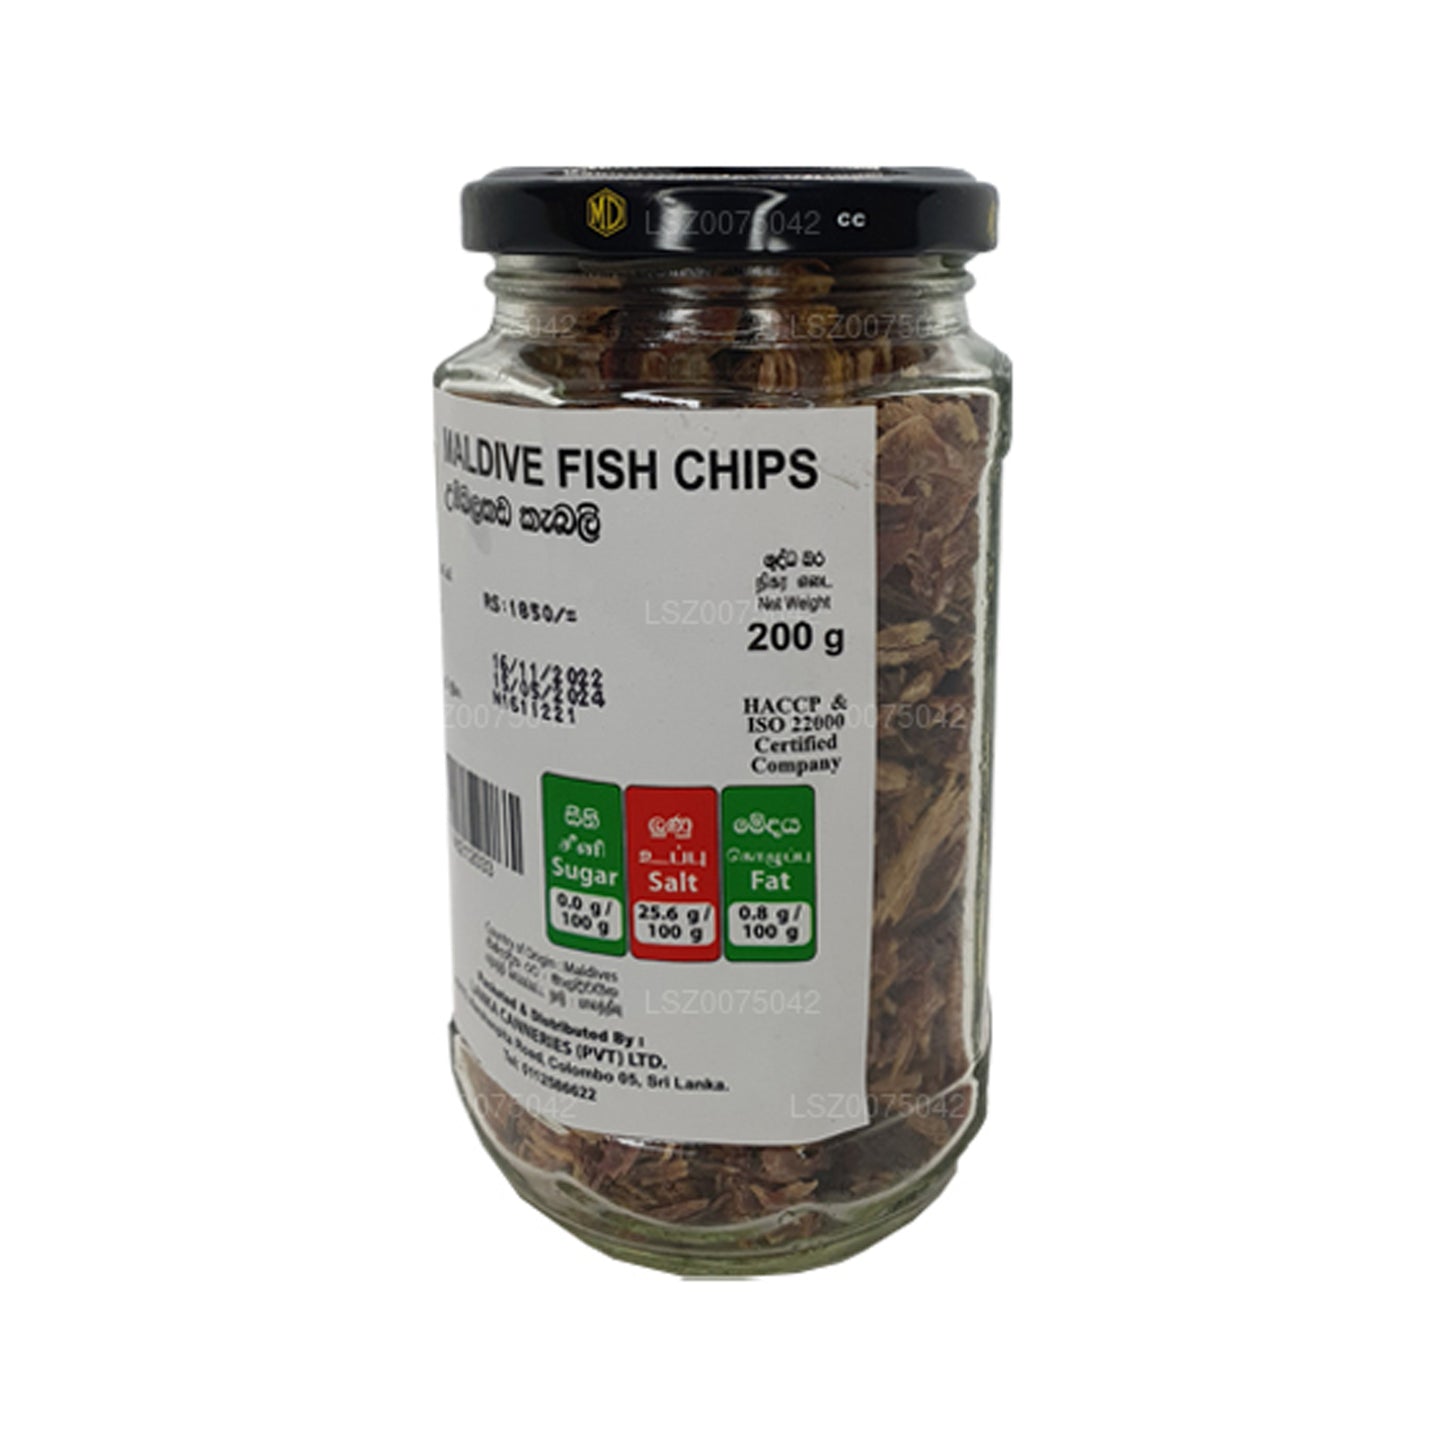 MD Maldive Fish Chips Butelka (200g)